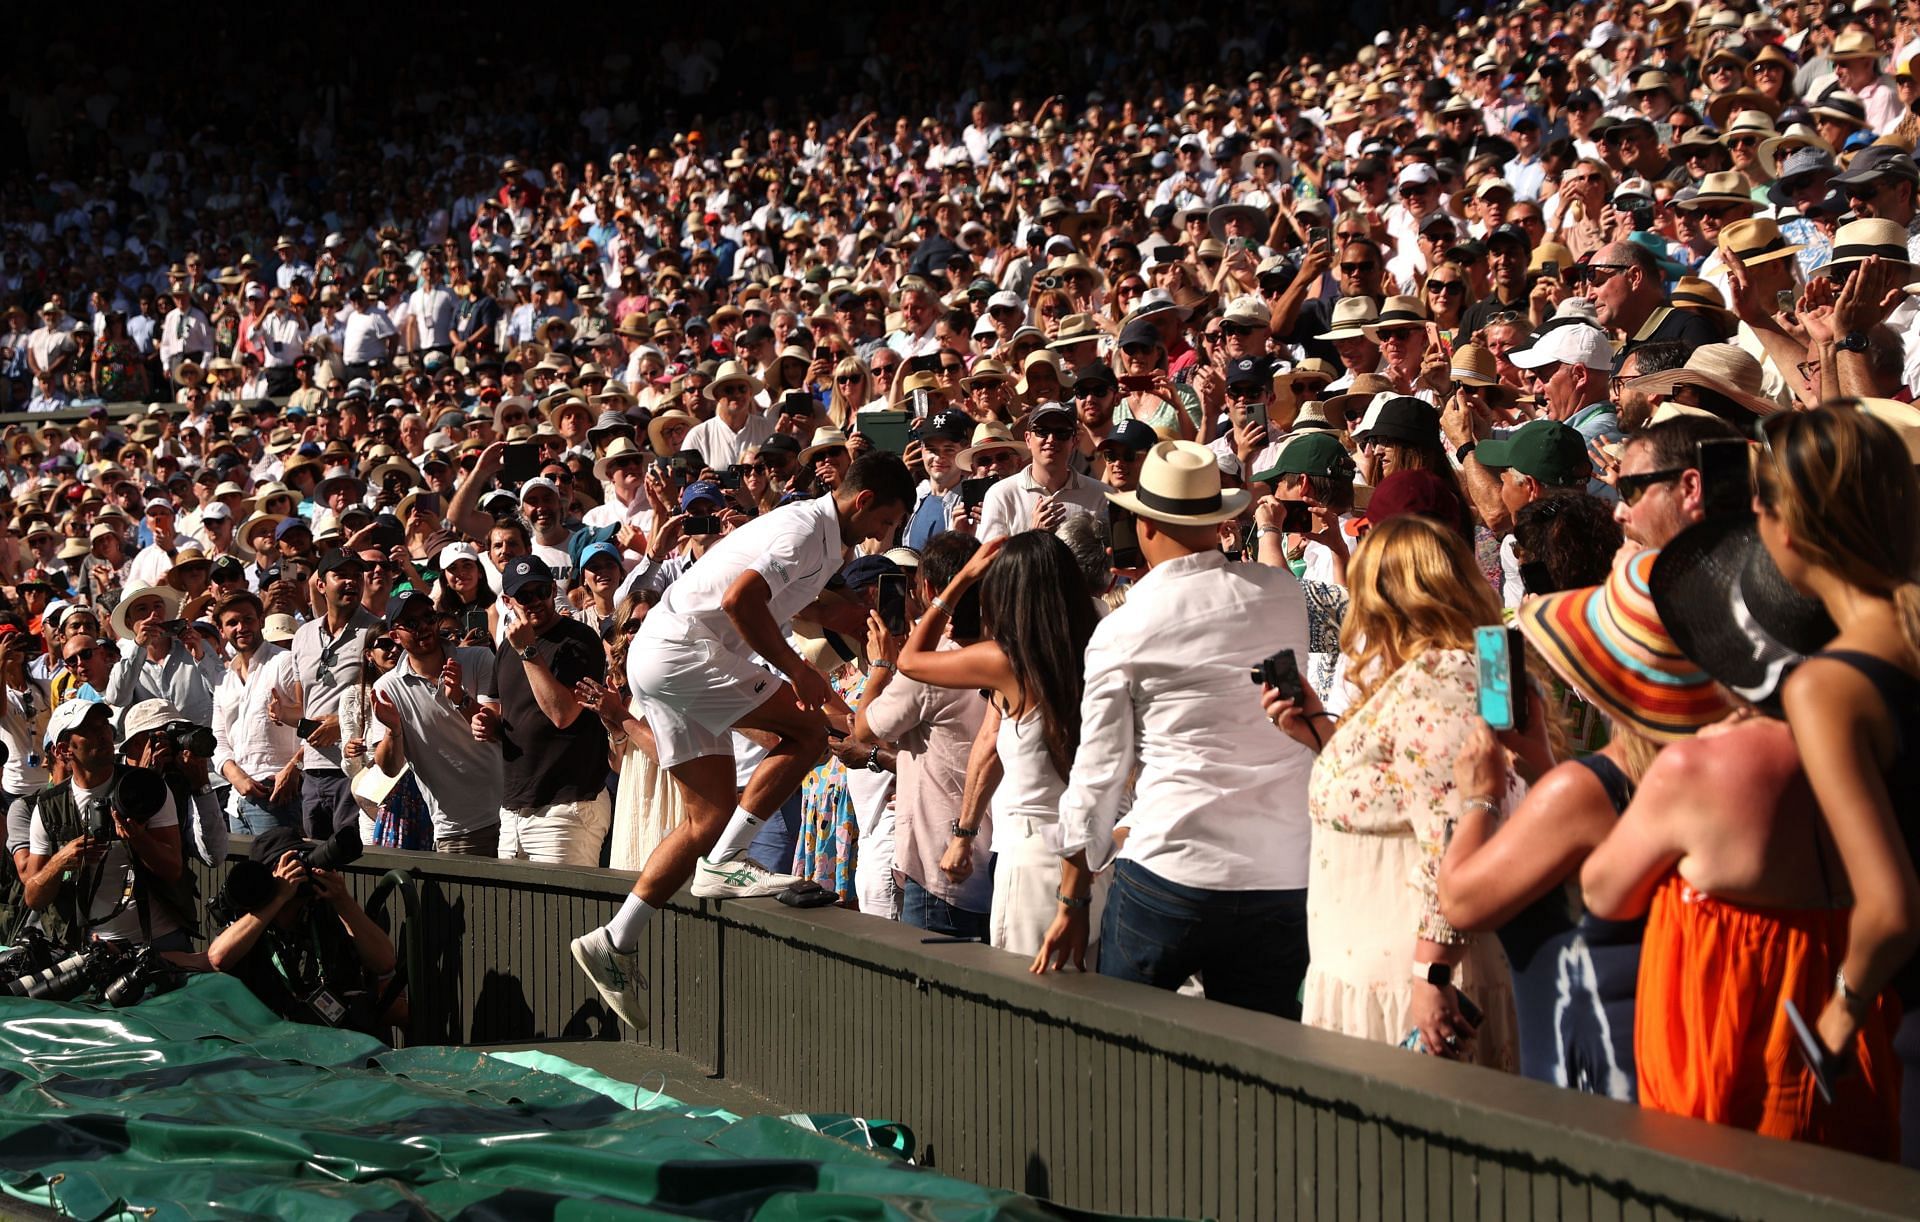 Novak Djokovic at the 2022 Wimbledon Championships.